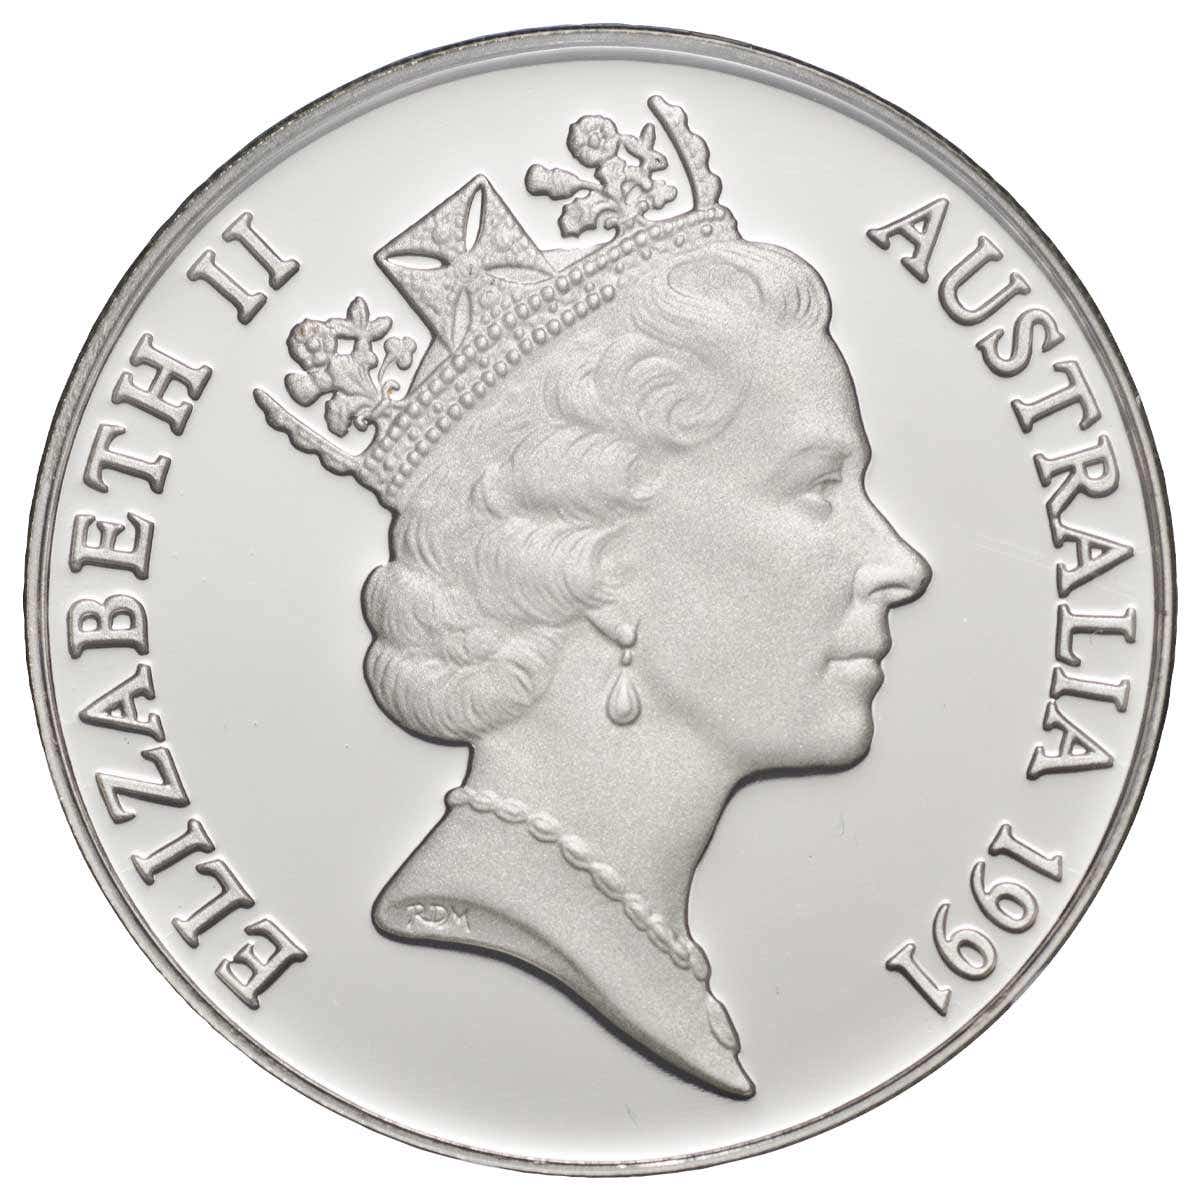 Australia Tasmania 1991 $10 Silver Proof Coin